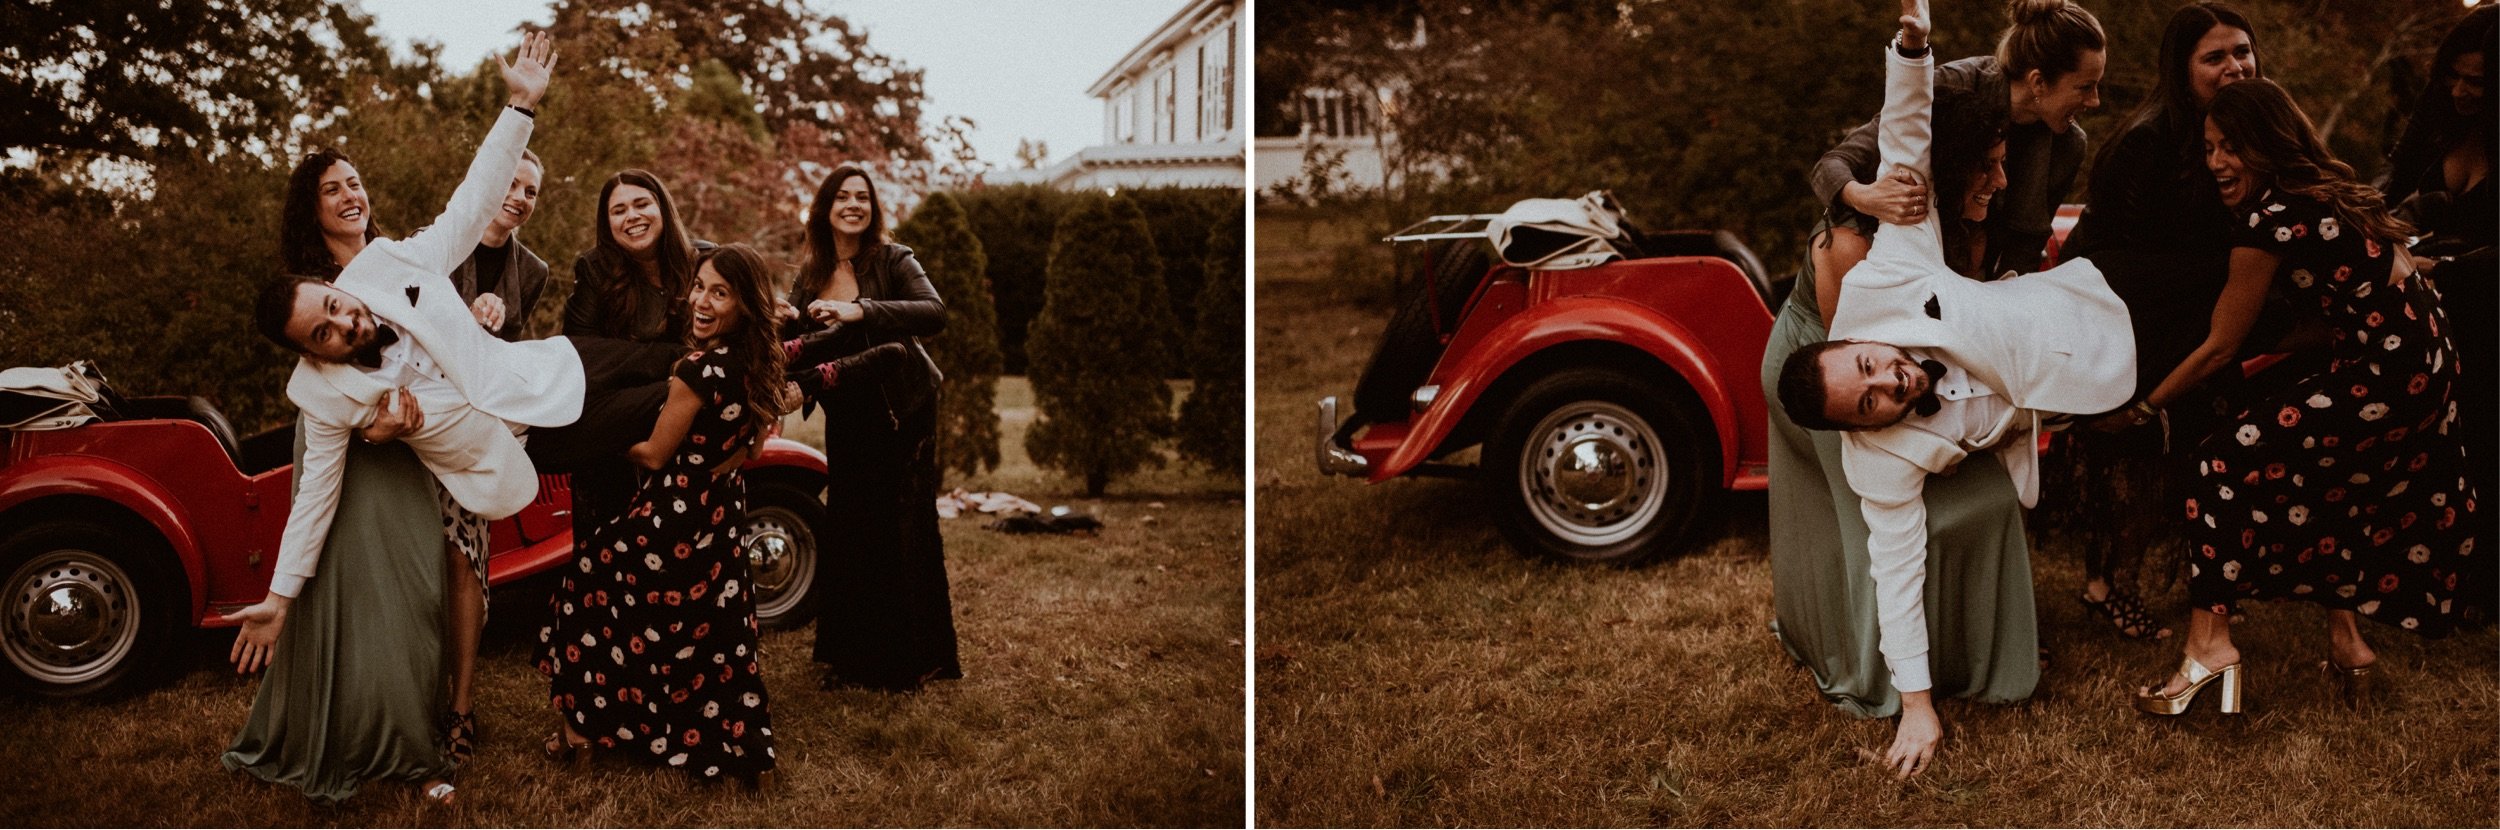 101_Timeless Backyard Wedding in Rhode Island - Vanessa Alves Photography.jpg